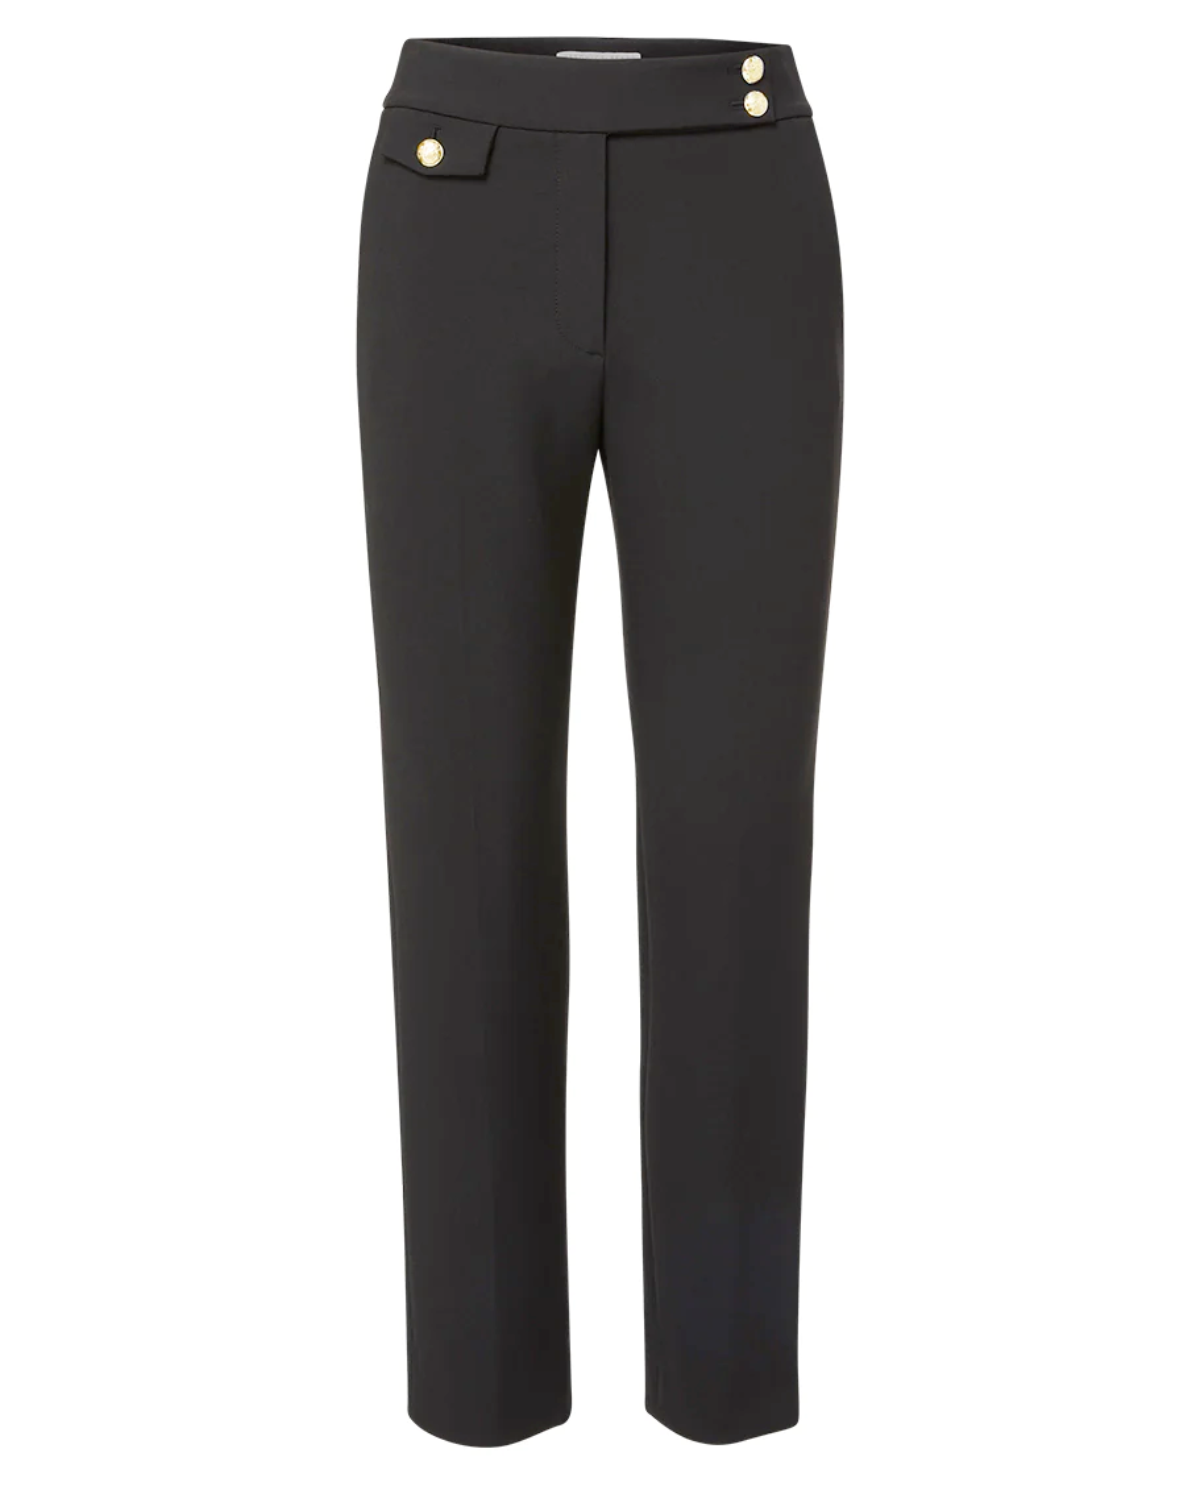 Buy Kaffe Sakura High Waist Zipped Black Trousers from the Next UK online  shop | Trousers women, Black trousers, Classic suit